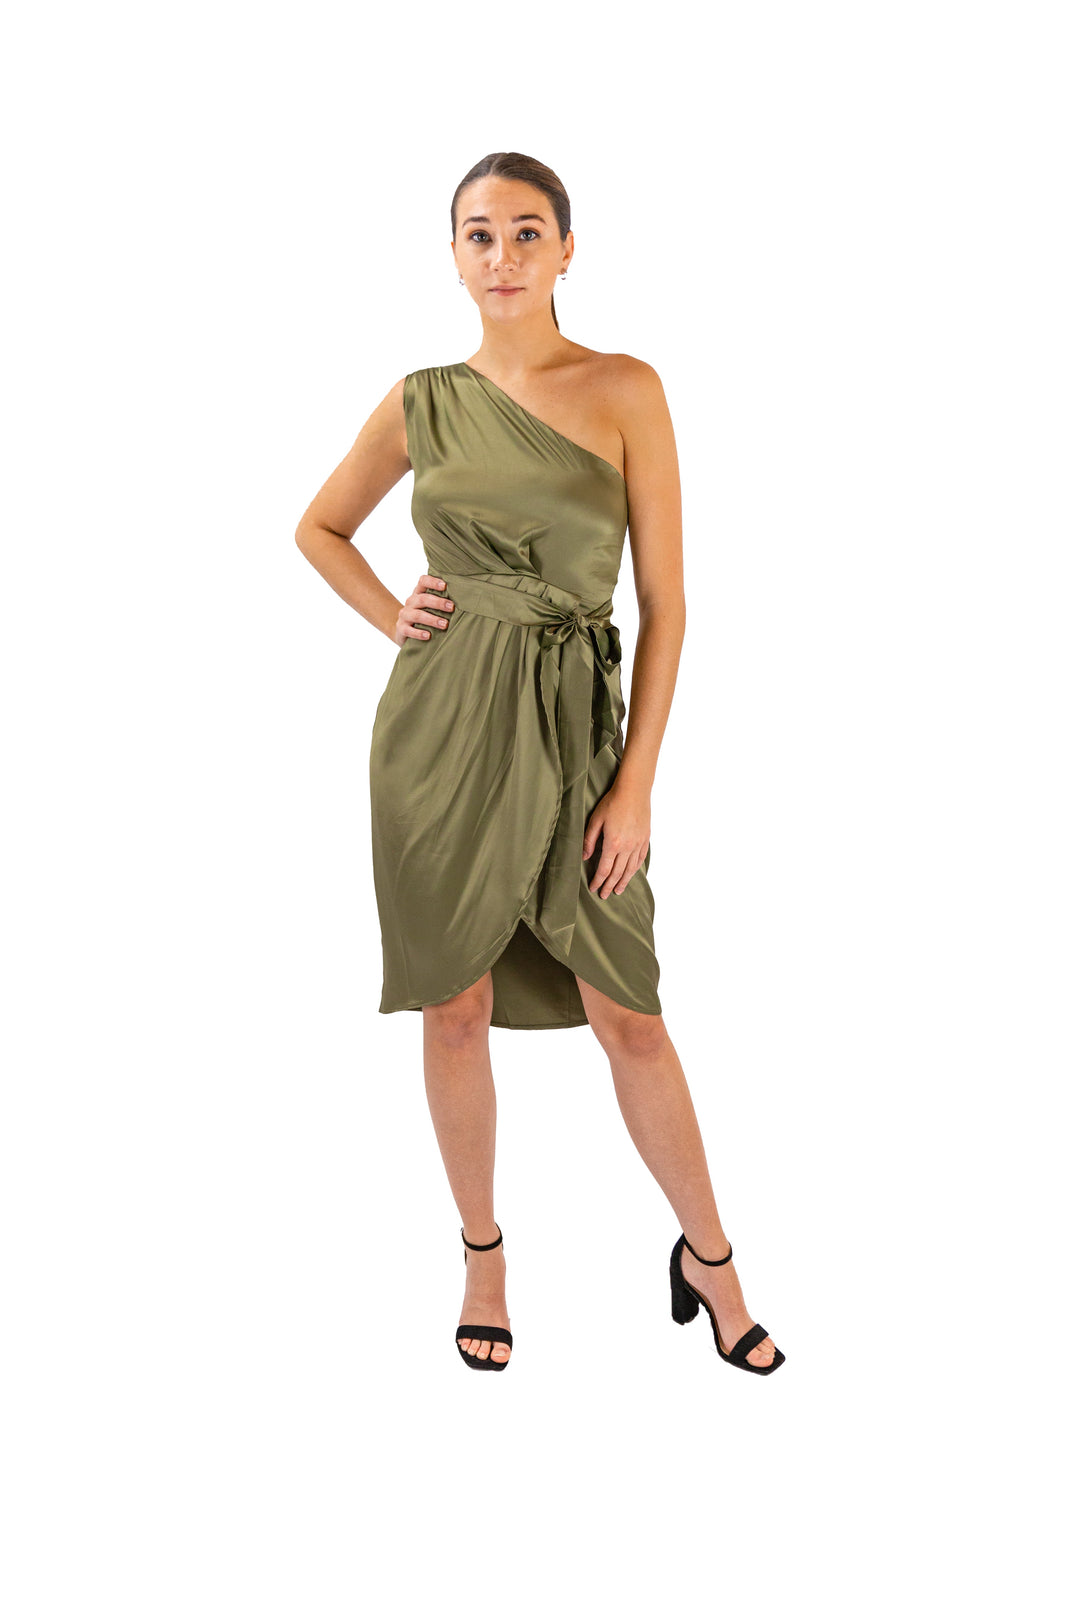 Fabonics Elegant Green Satin One-Shoulder Belted Dress with Waist Accentuation